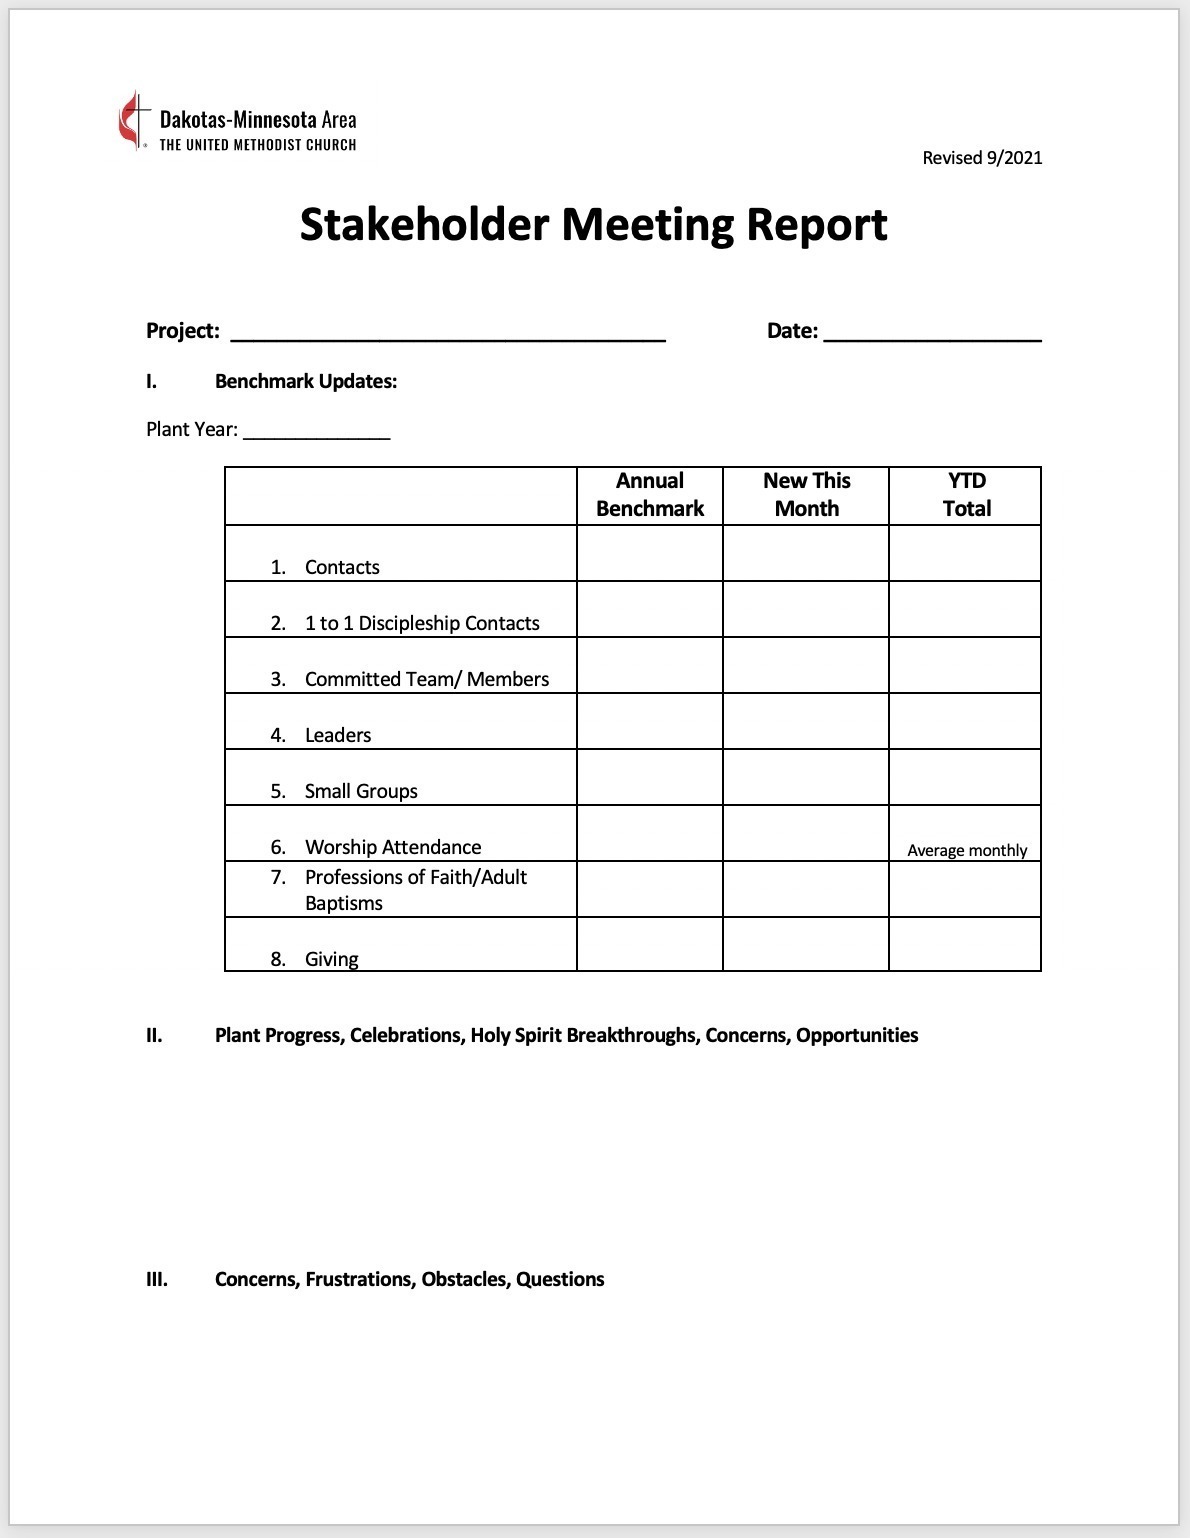 Stakeholder_Meeting_Report